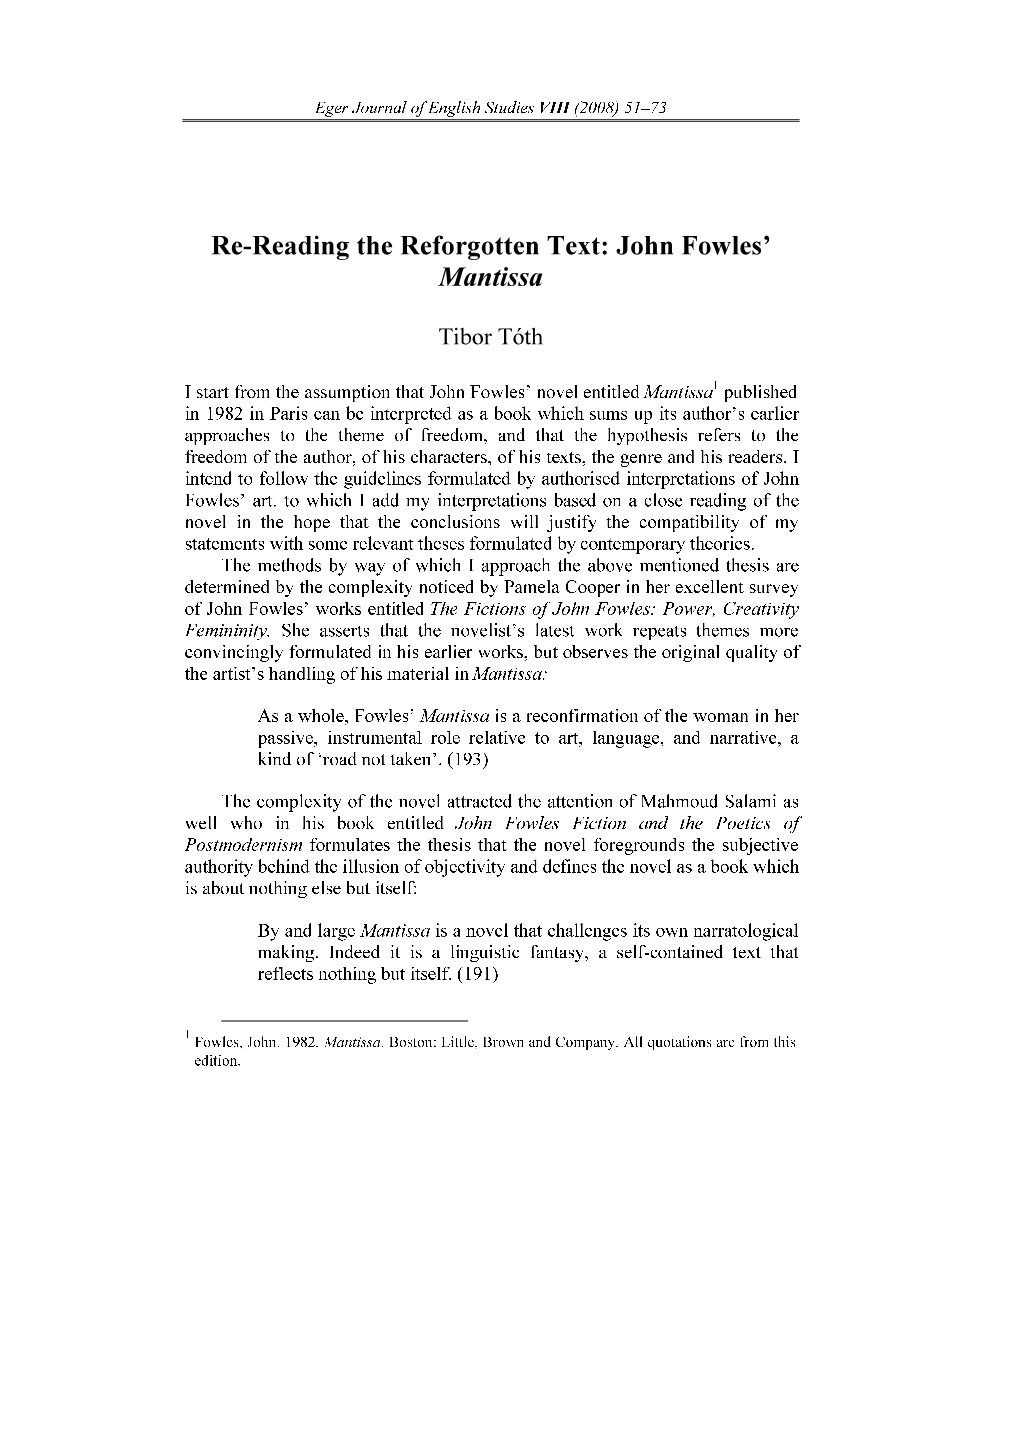 Re-Reading the Reforgotten Text: John Fowles' Mantissa